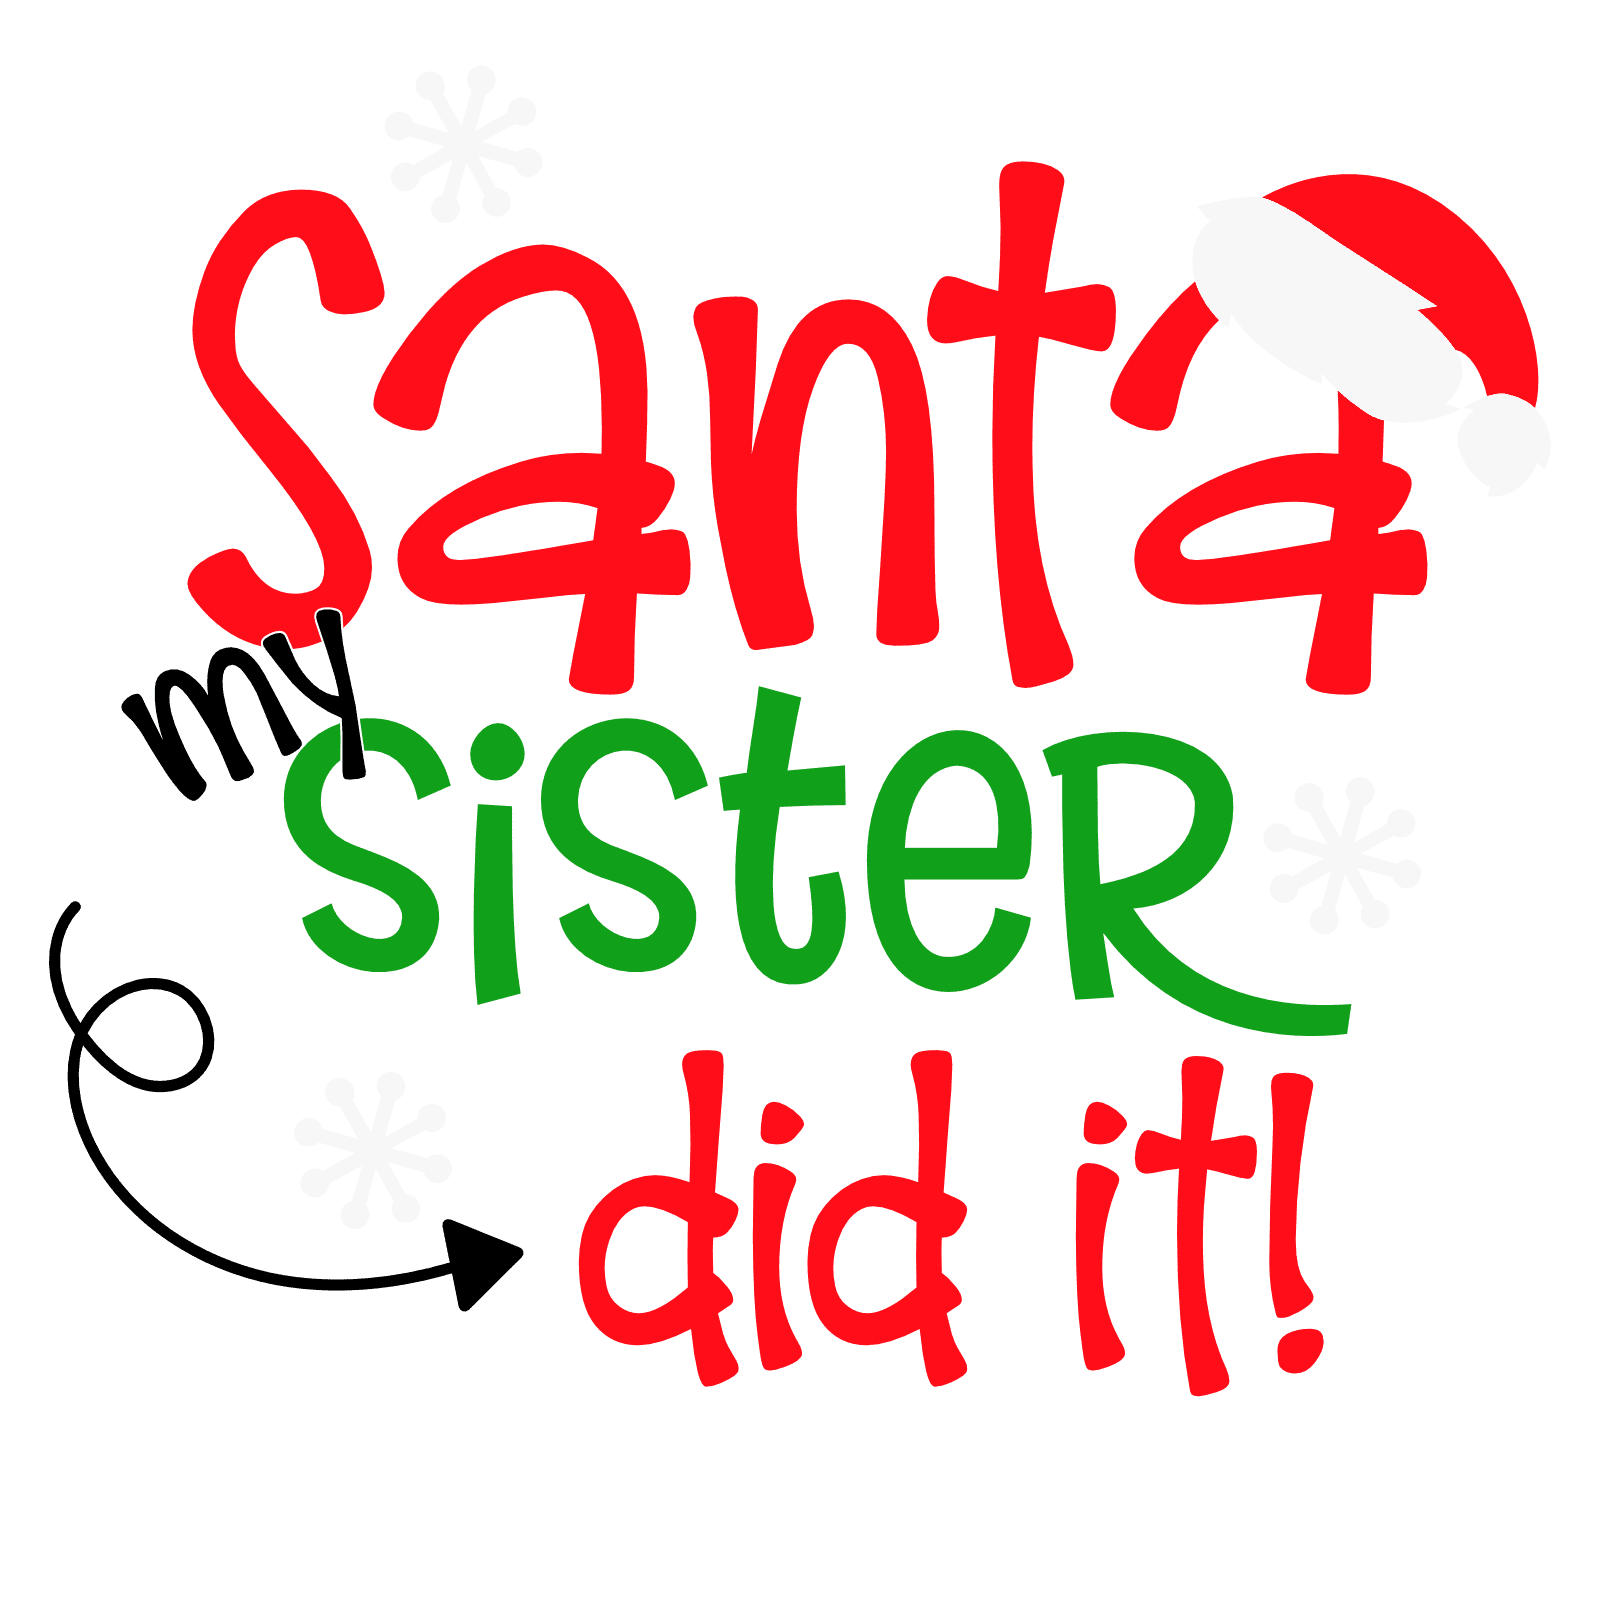 santa-my-sister-did-it-christmas-free-svg-file-SvgHeart.Com